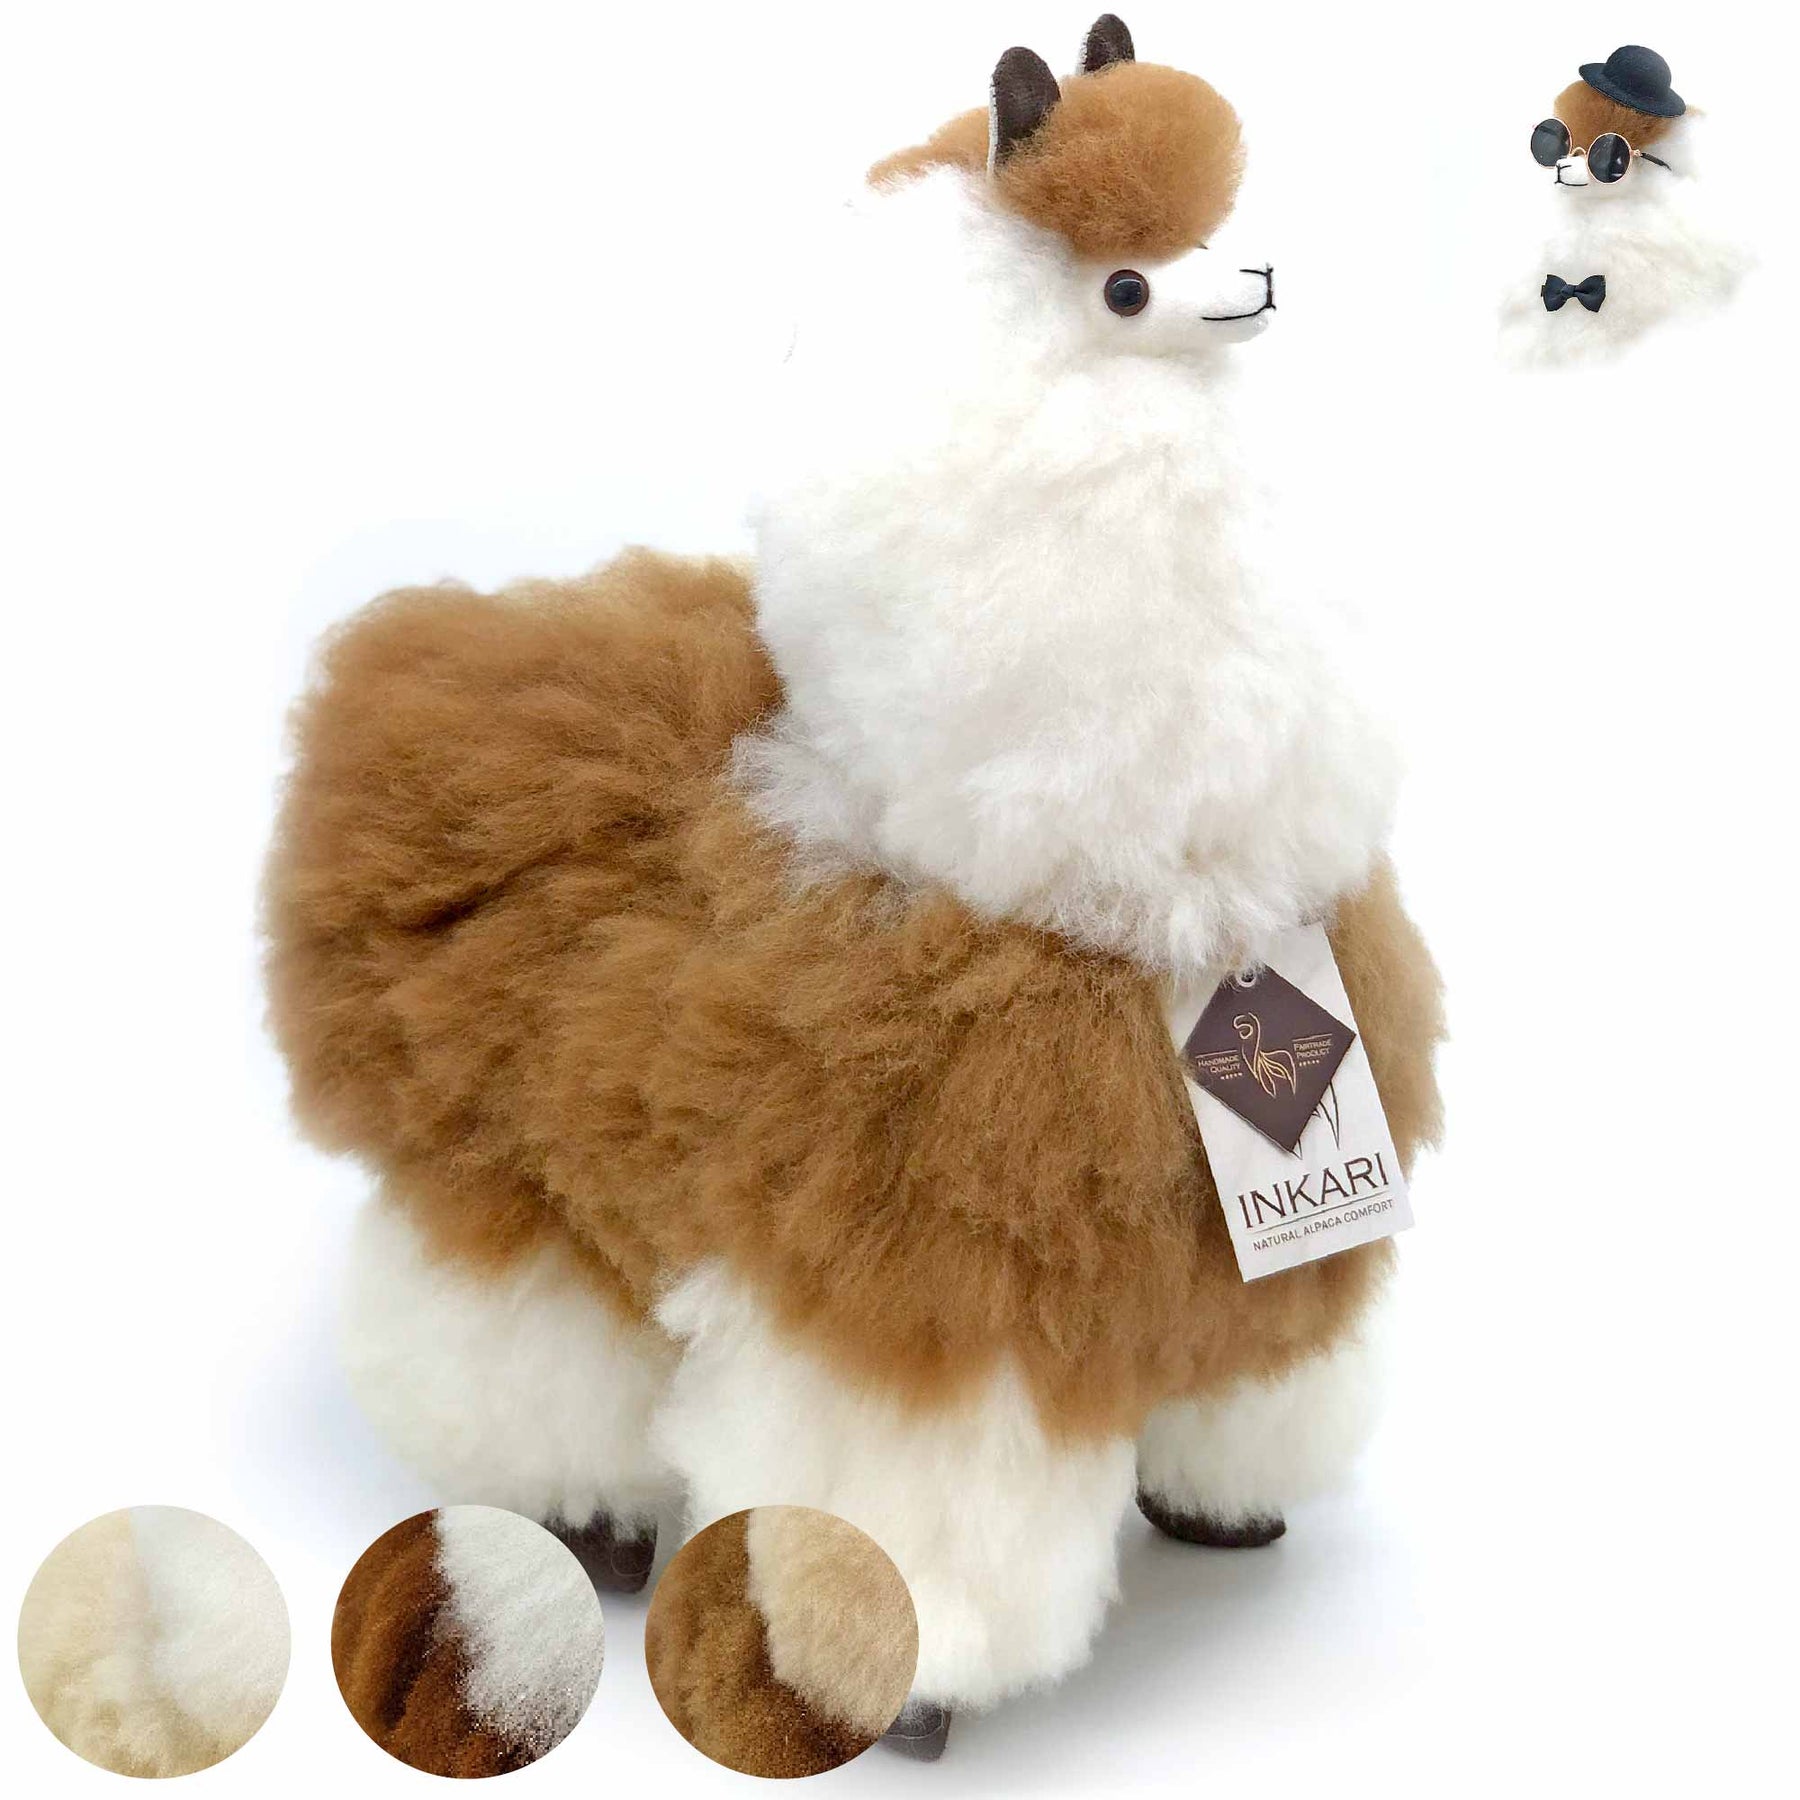 Large (50cm) - Alpaca Stuffed Animal